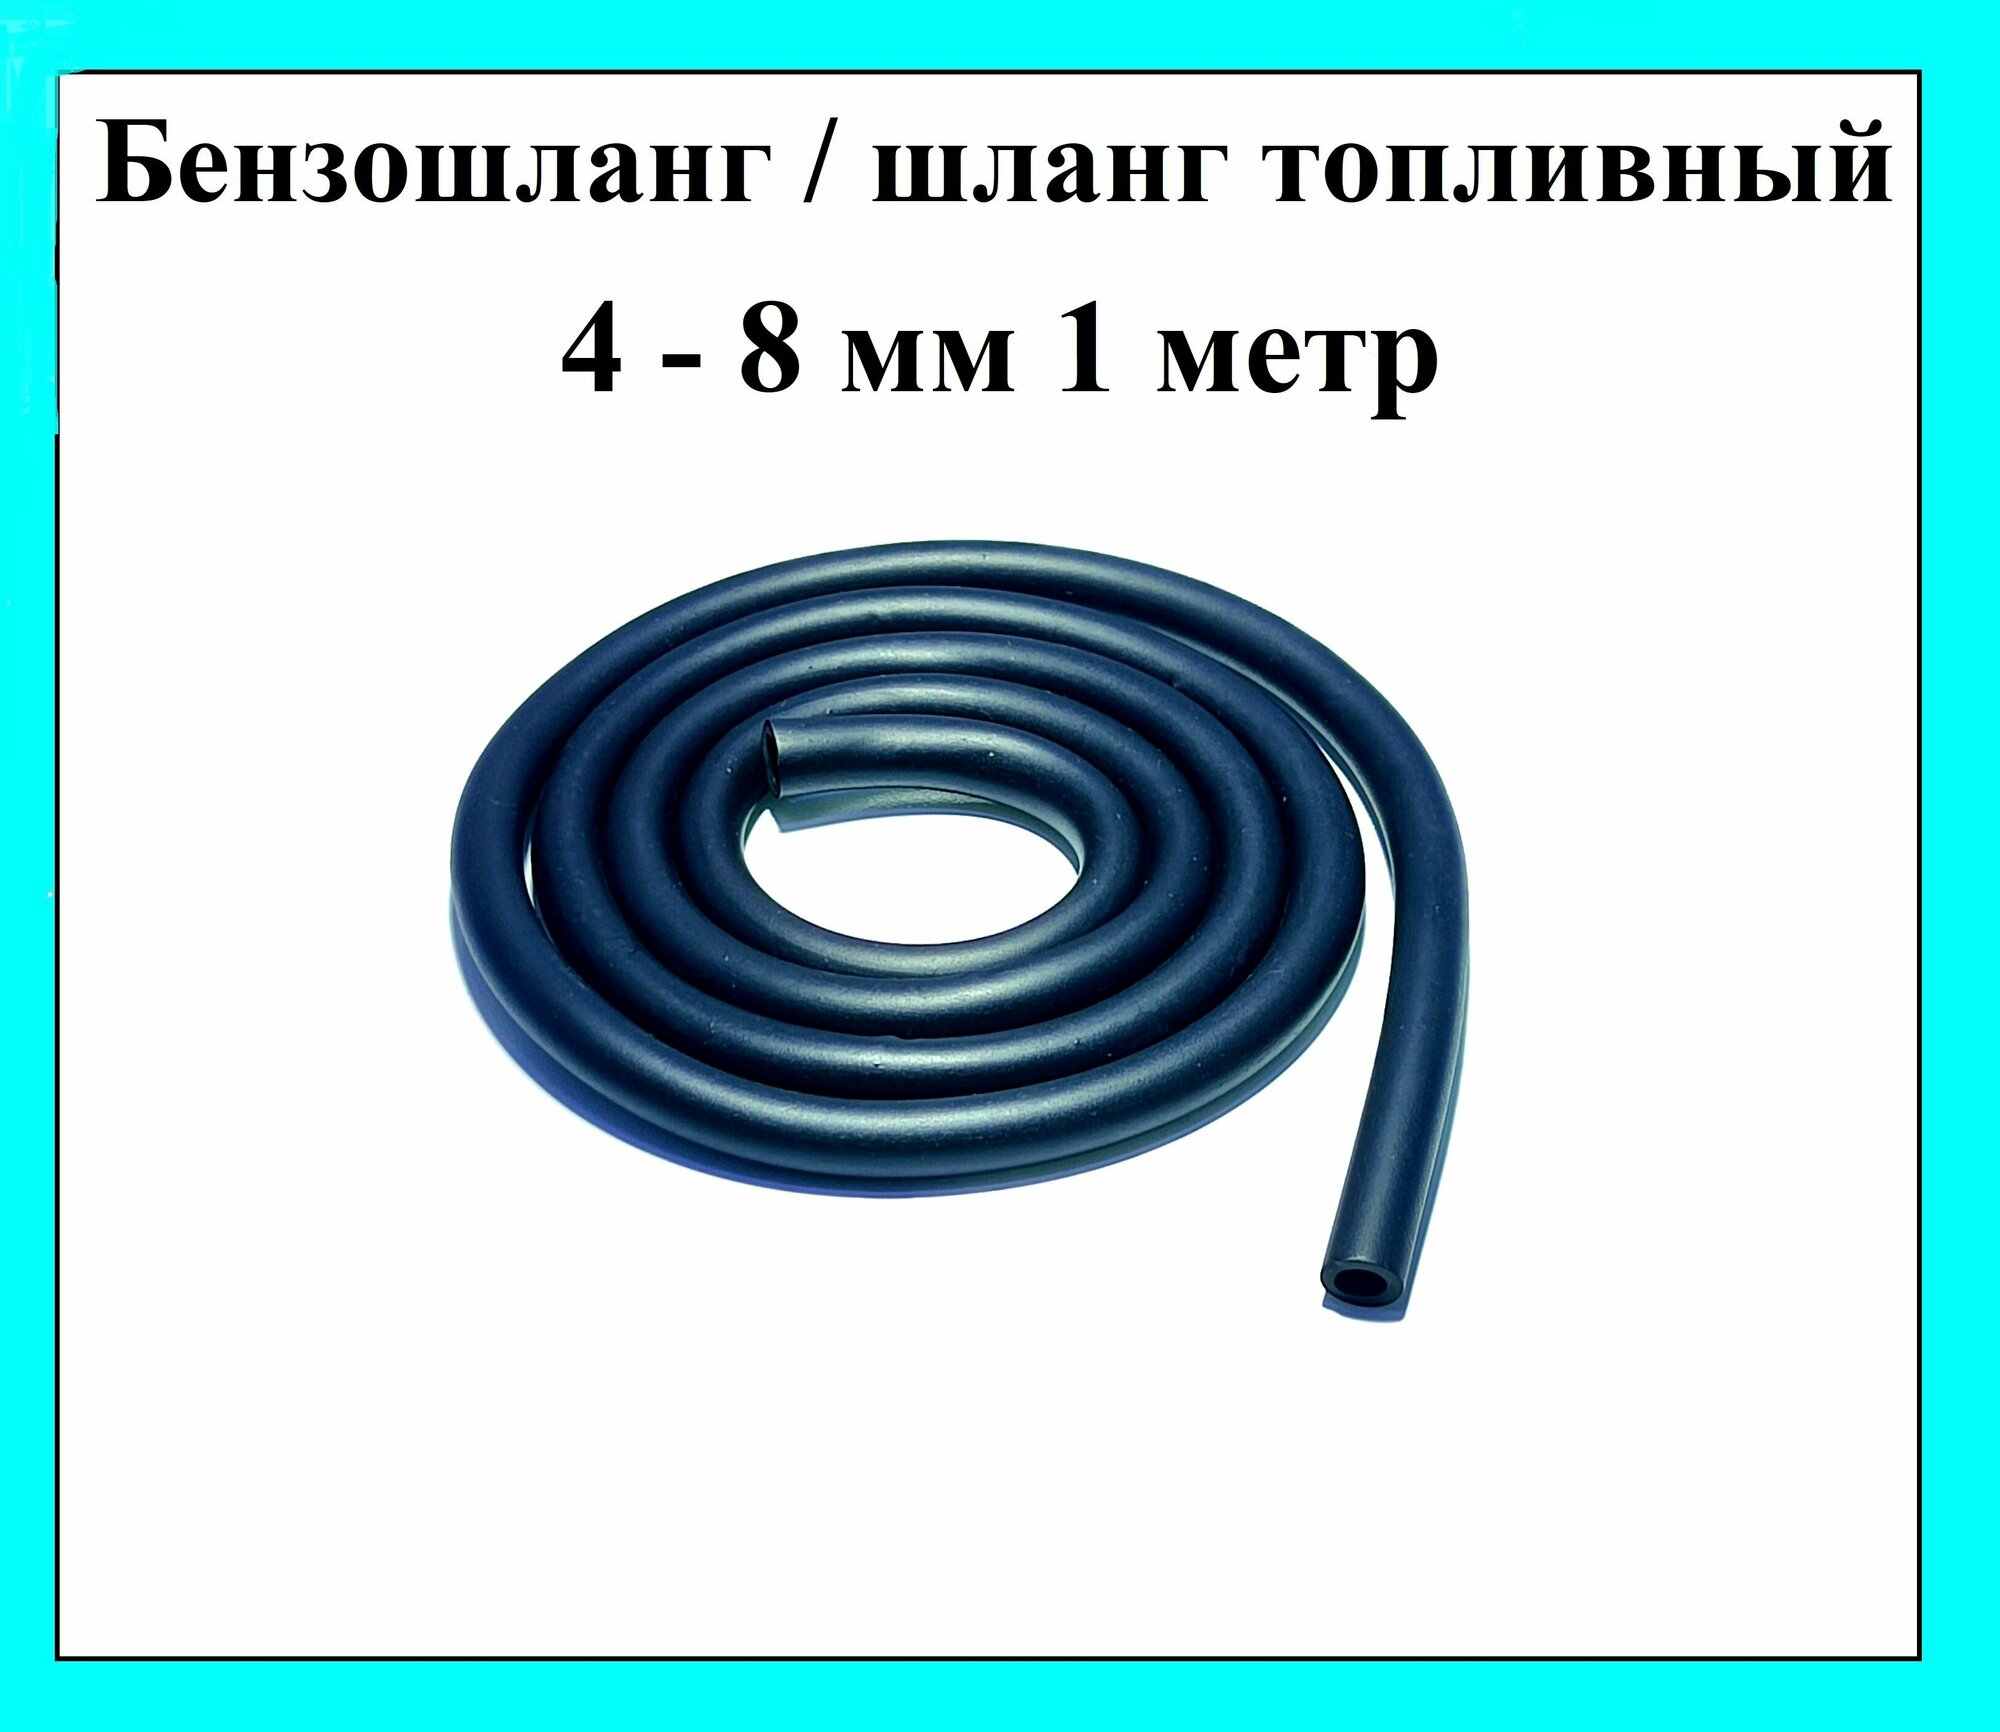 Бензошланг шланг топливный PVC внутренний диаметр 4 мм внешний 8 мм 1 метр